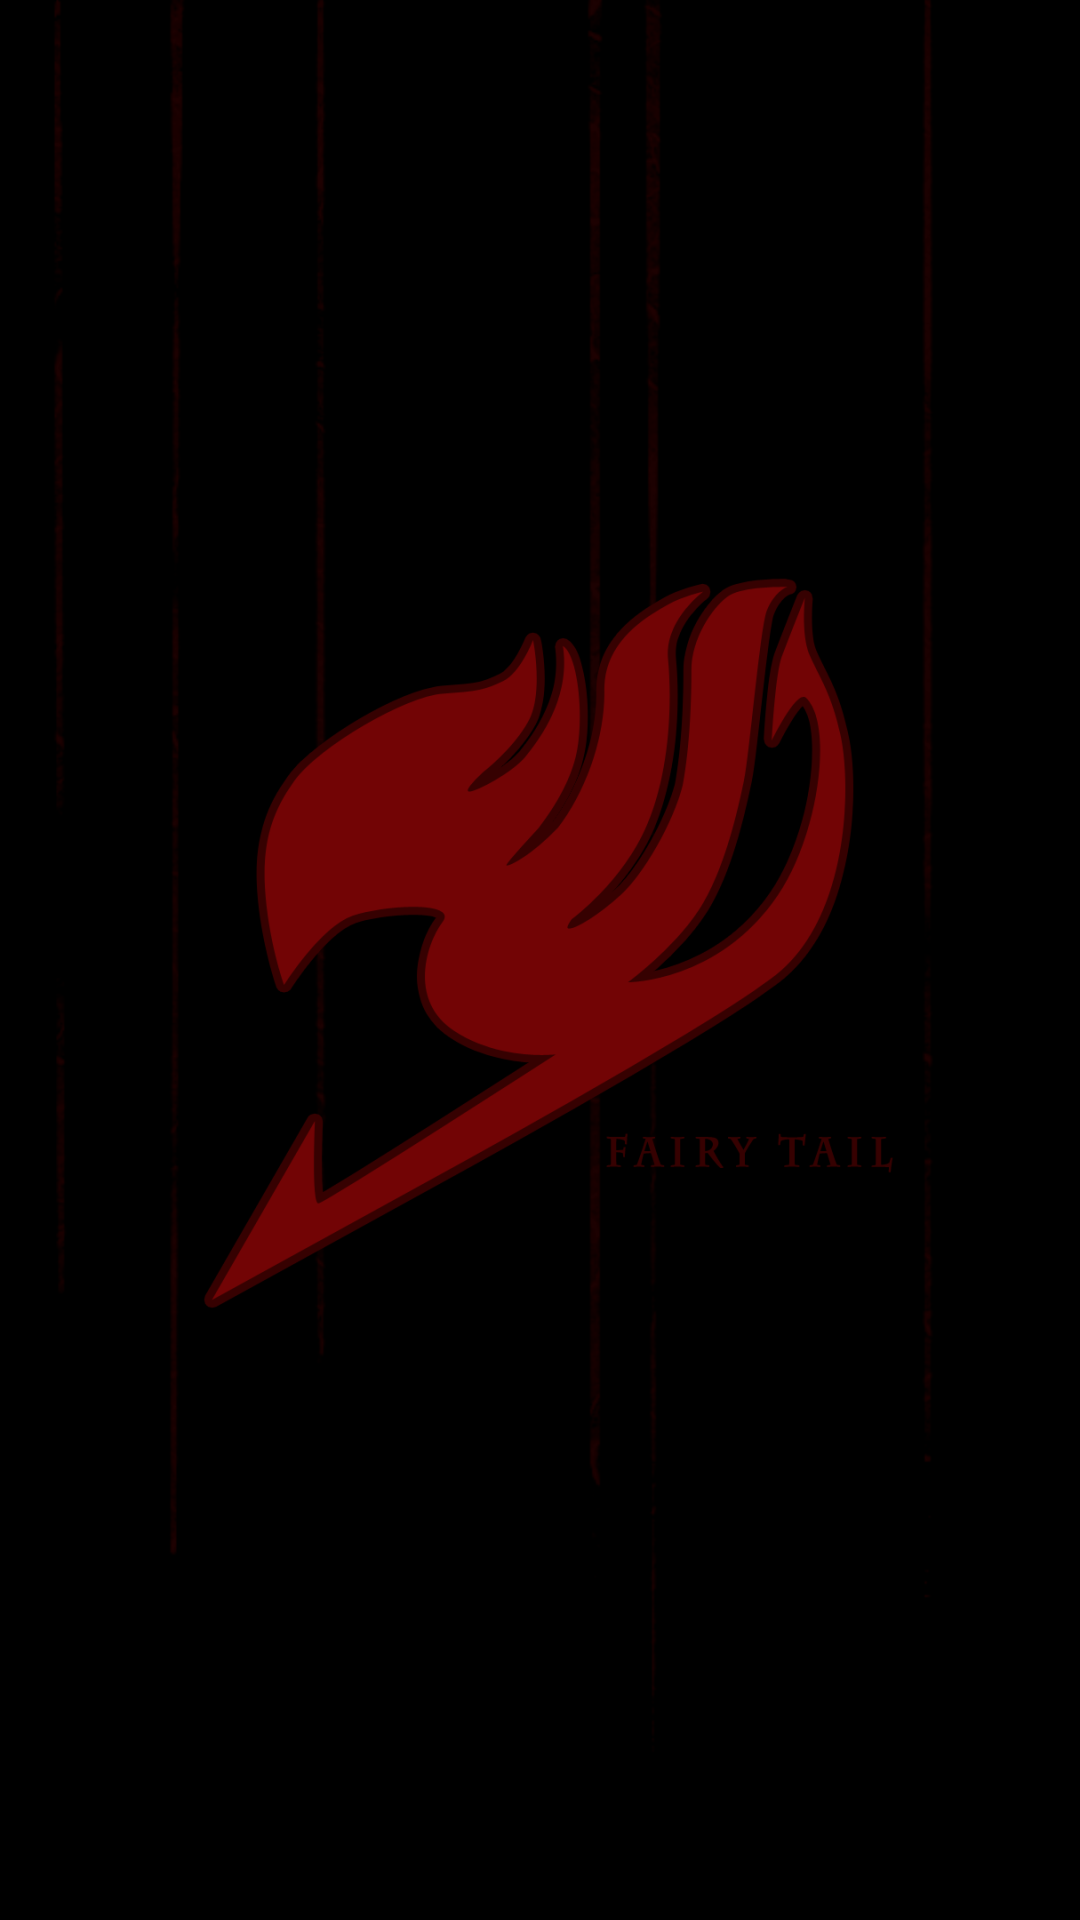 Fairy Tail Sequel Anime Announced | The Nerd Stash